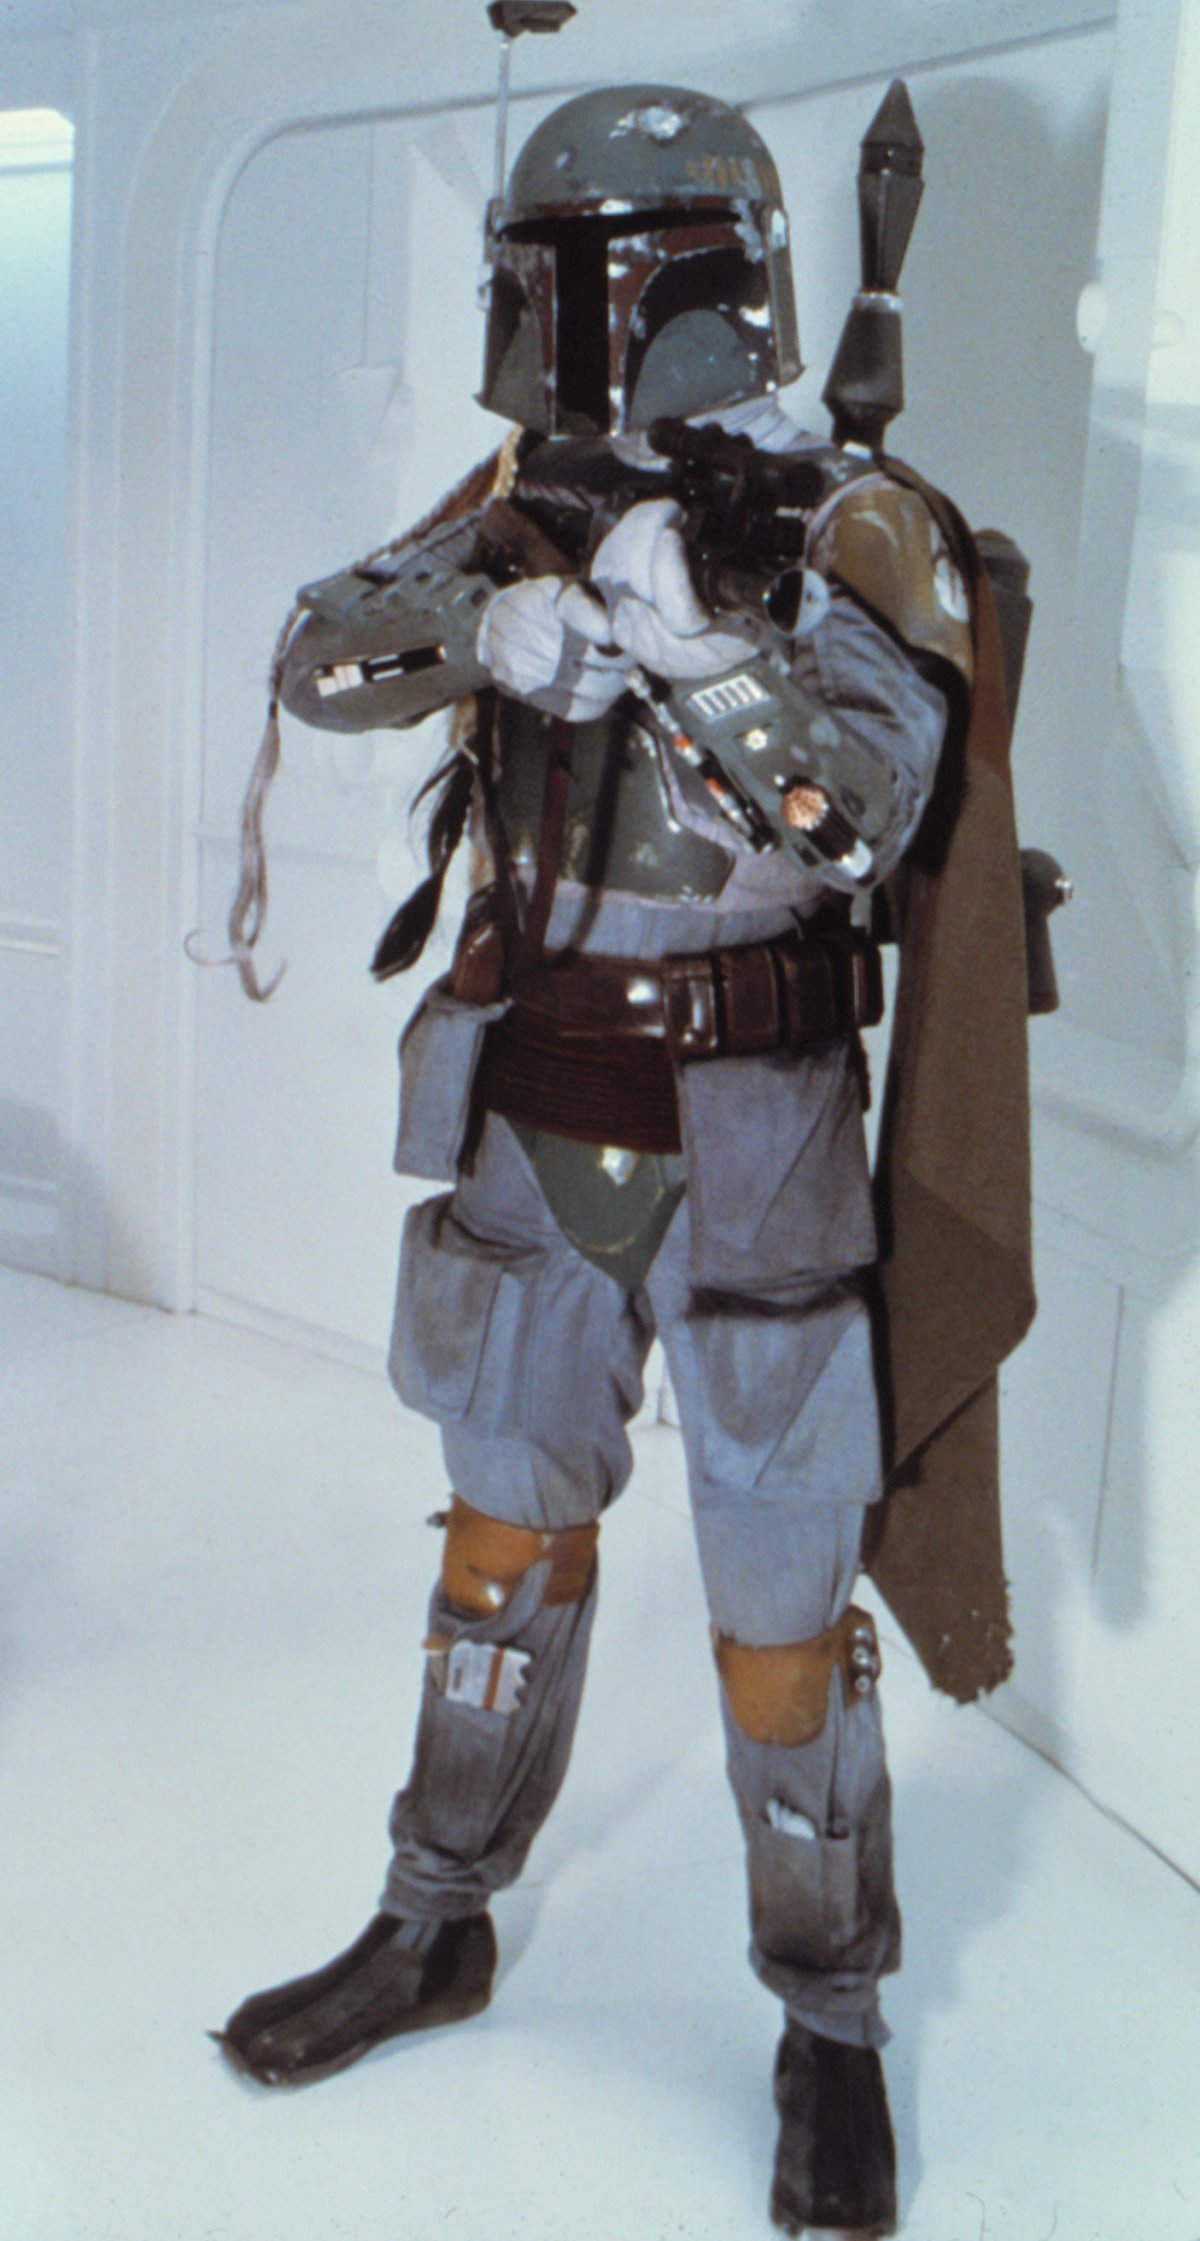 Jeremy Bulloch is shown as Boba Fett in The Empire Strikes Back.